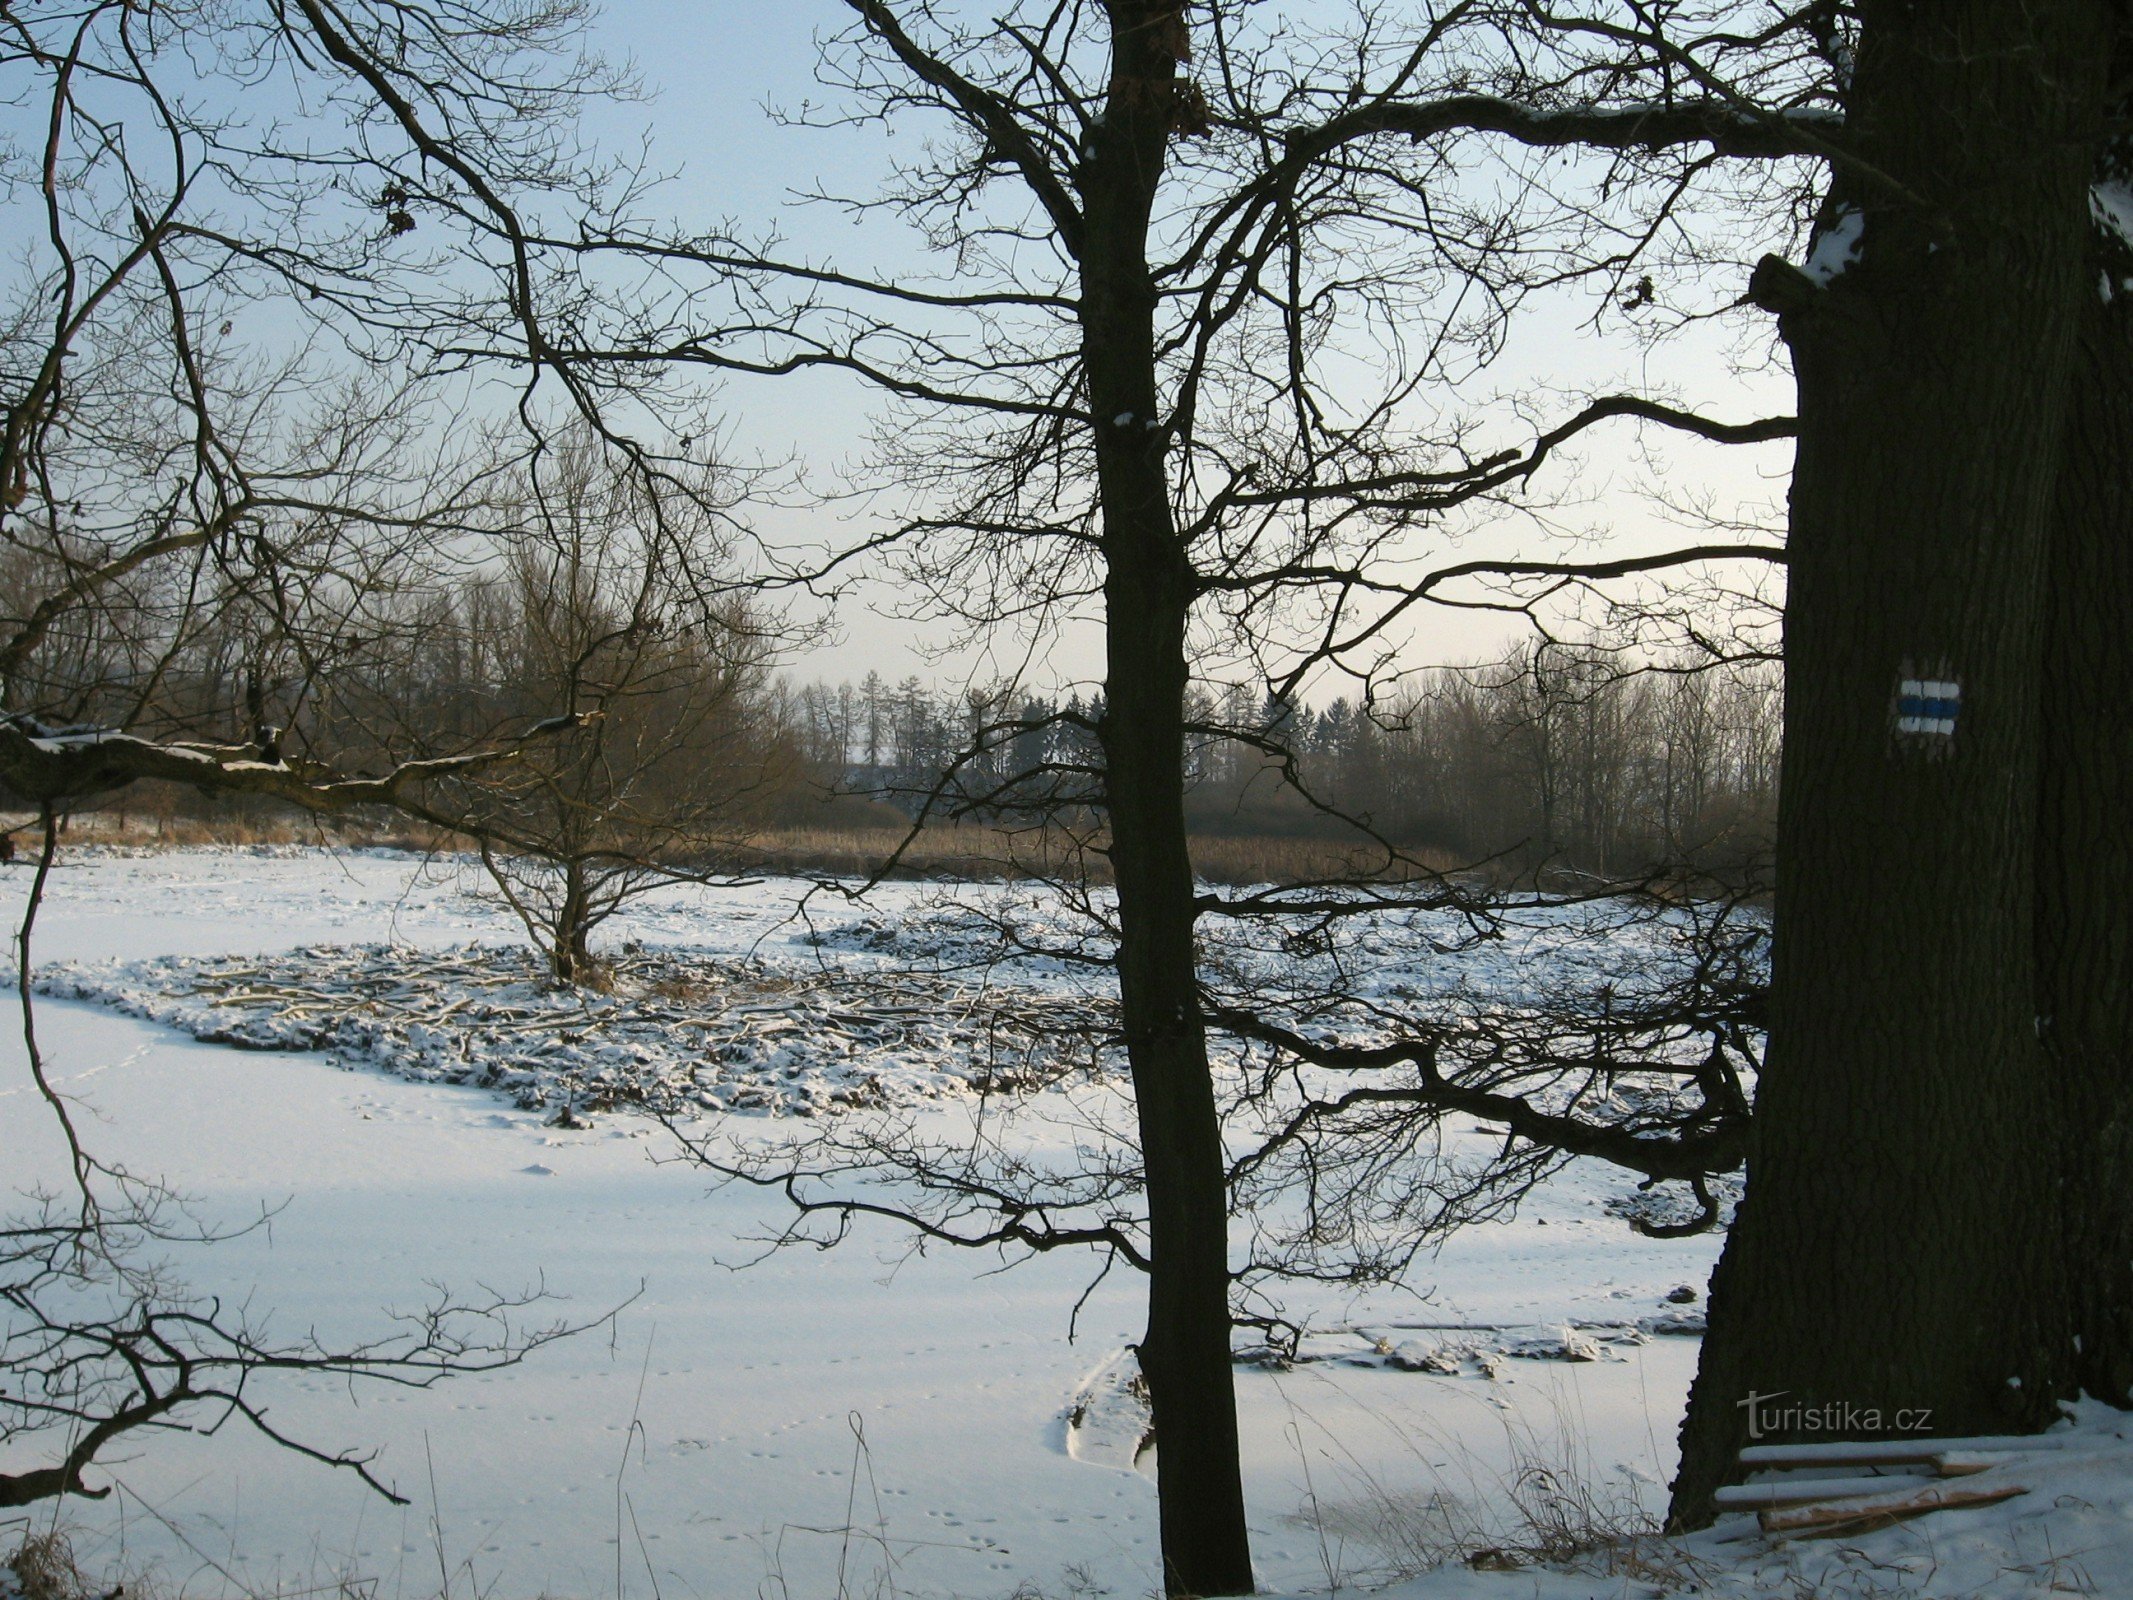 Revitalisierung von Dolejší rybník - Februar 2012